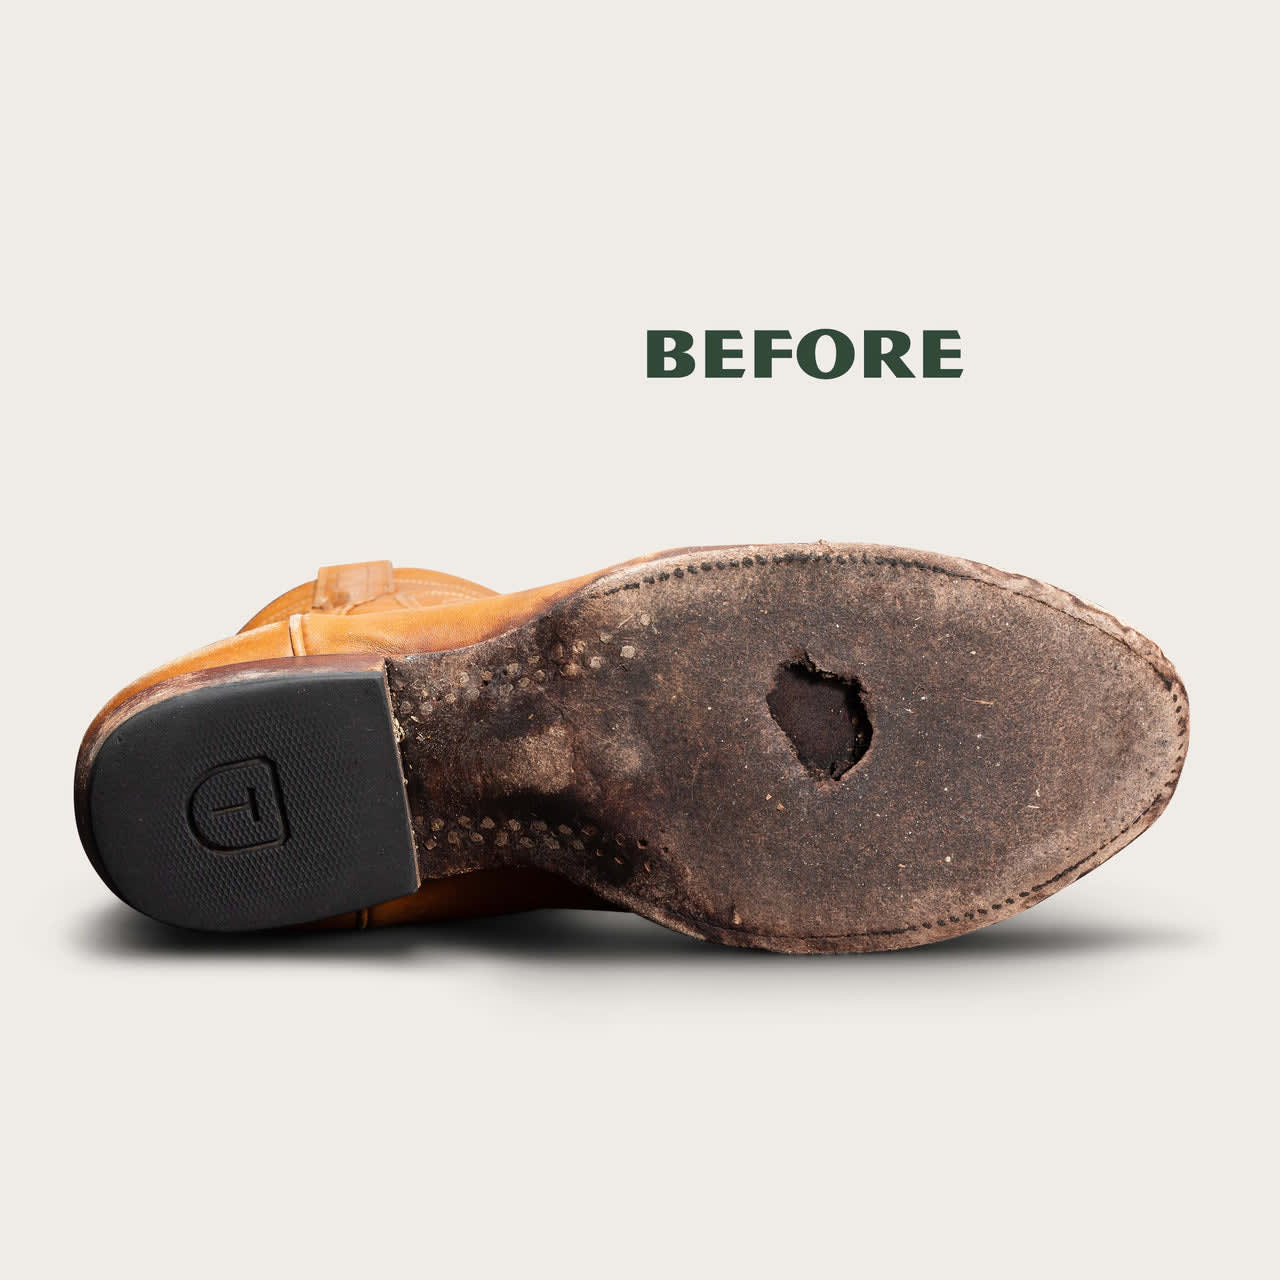 Boot Restoration - Label